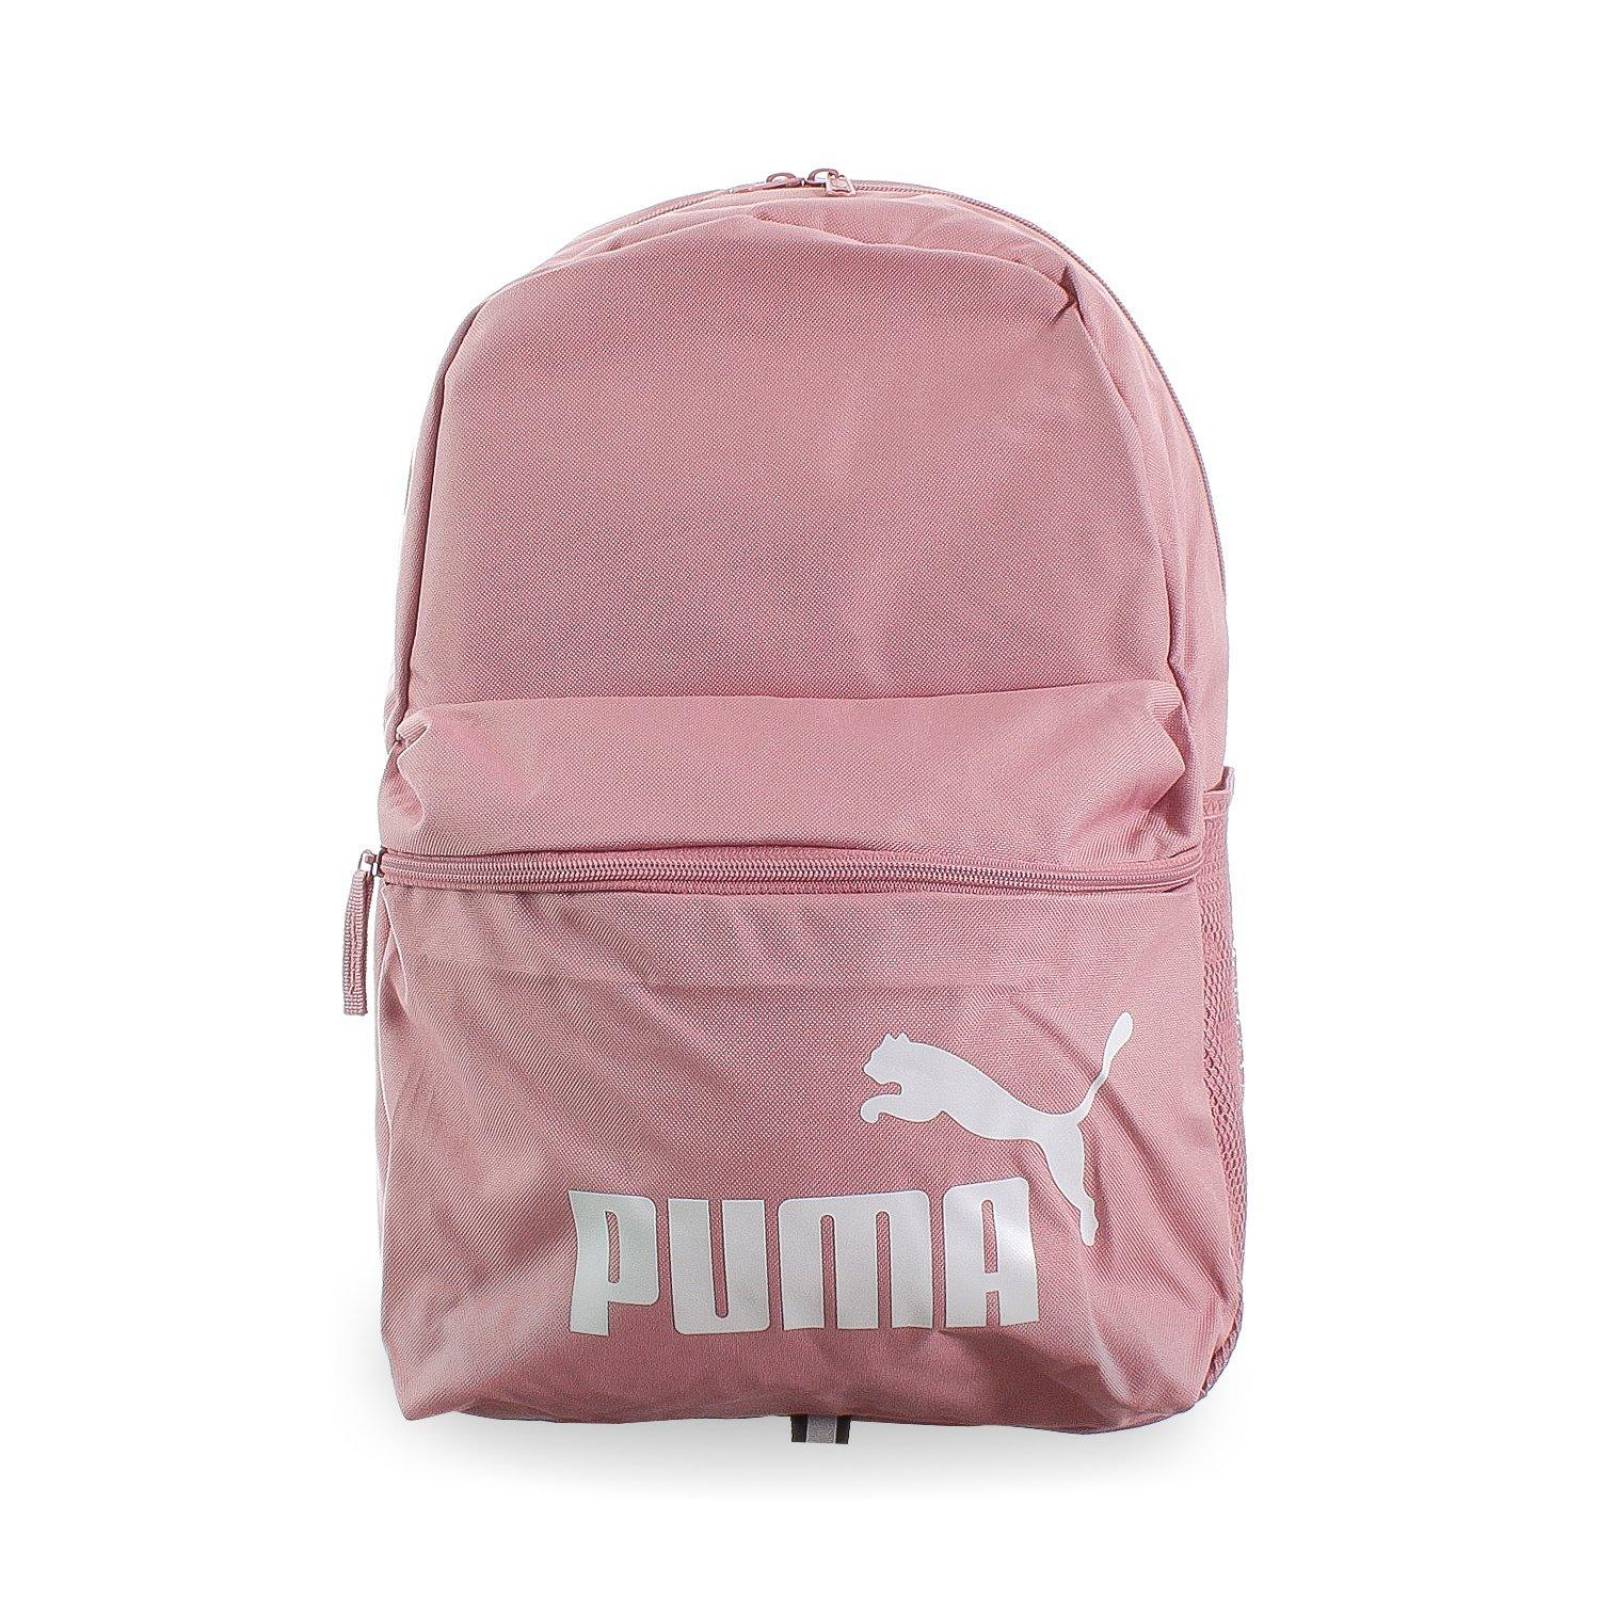 Mochila Puma Phase - 07548744 - Rosa - Mujer